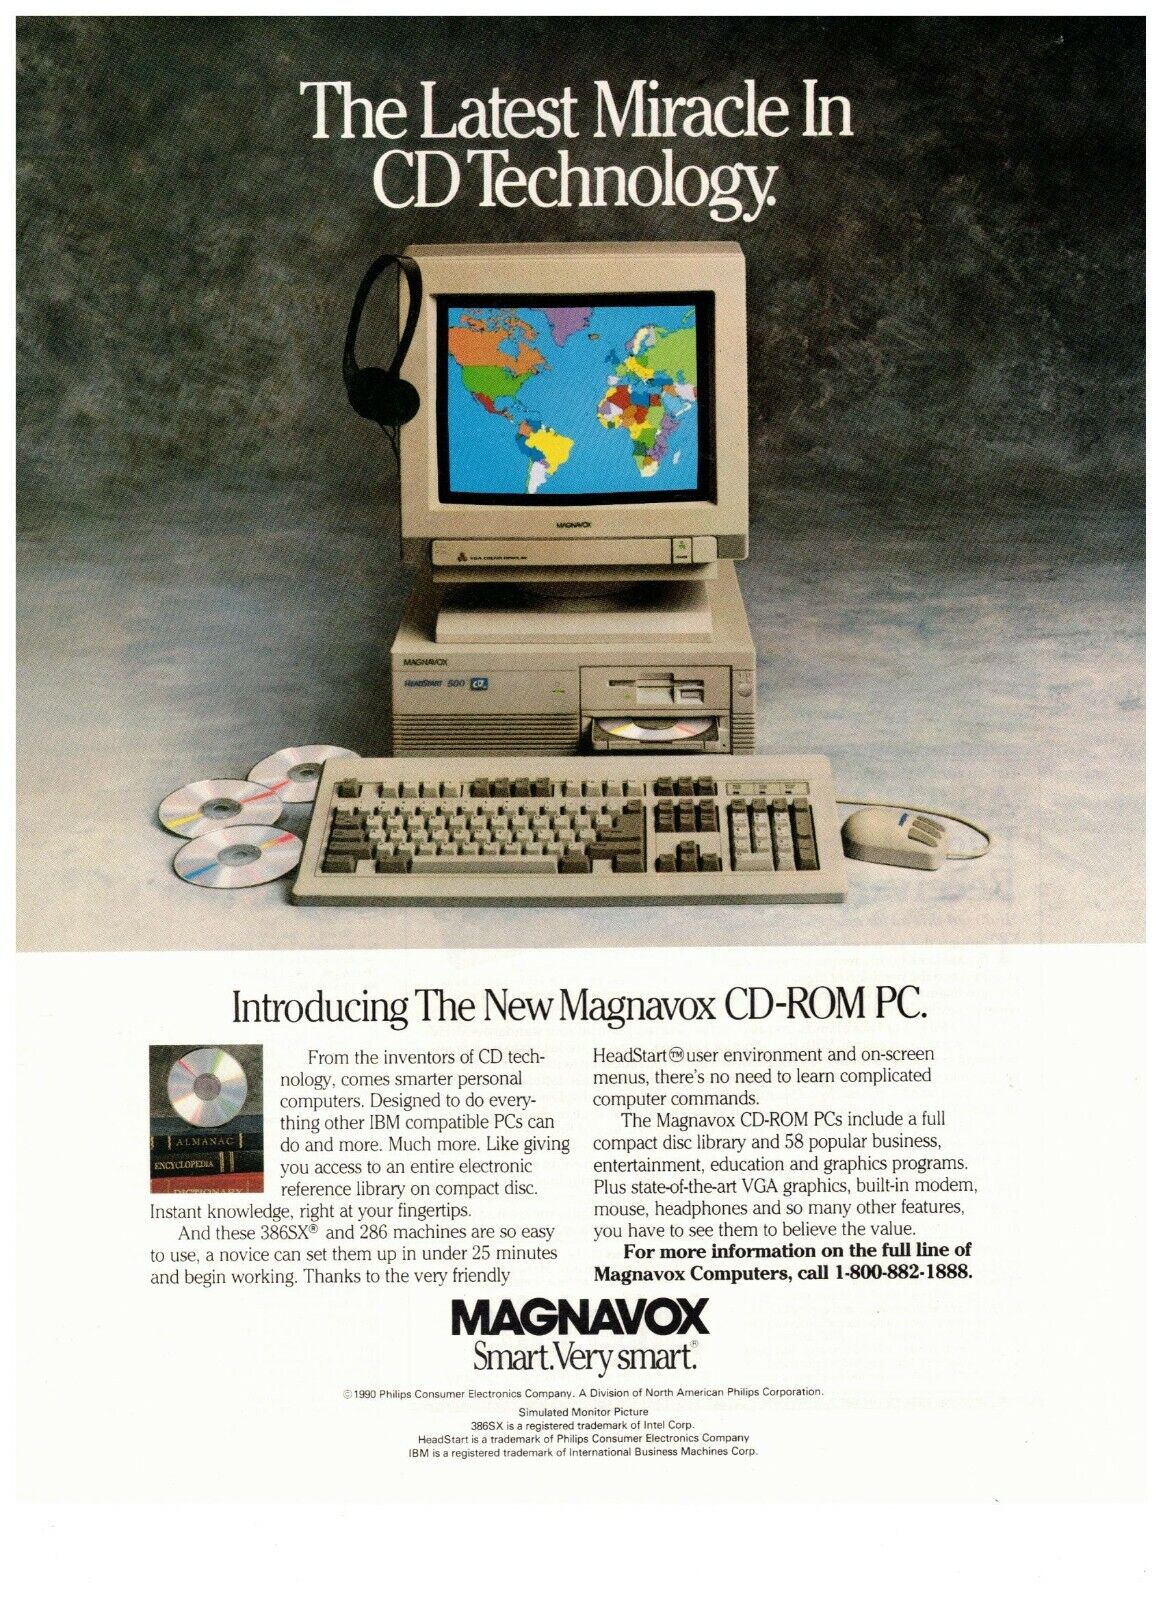 1990 Magnavox CD-Rom PC IMB Vintage Print Advertisement